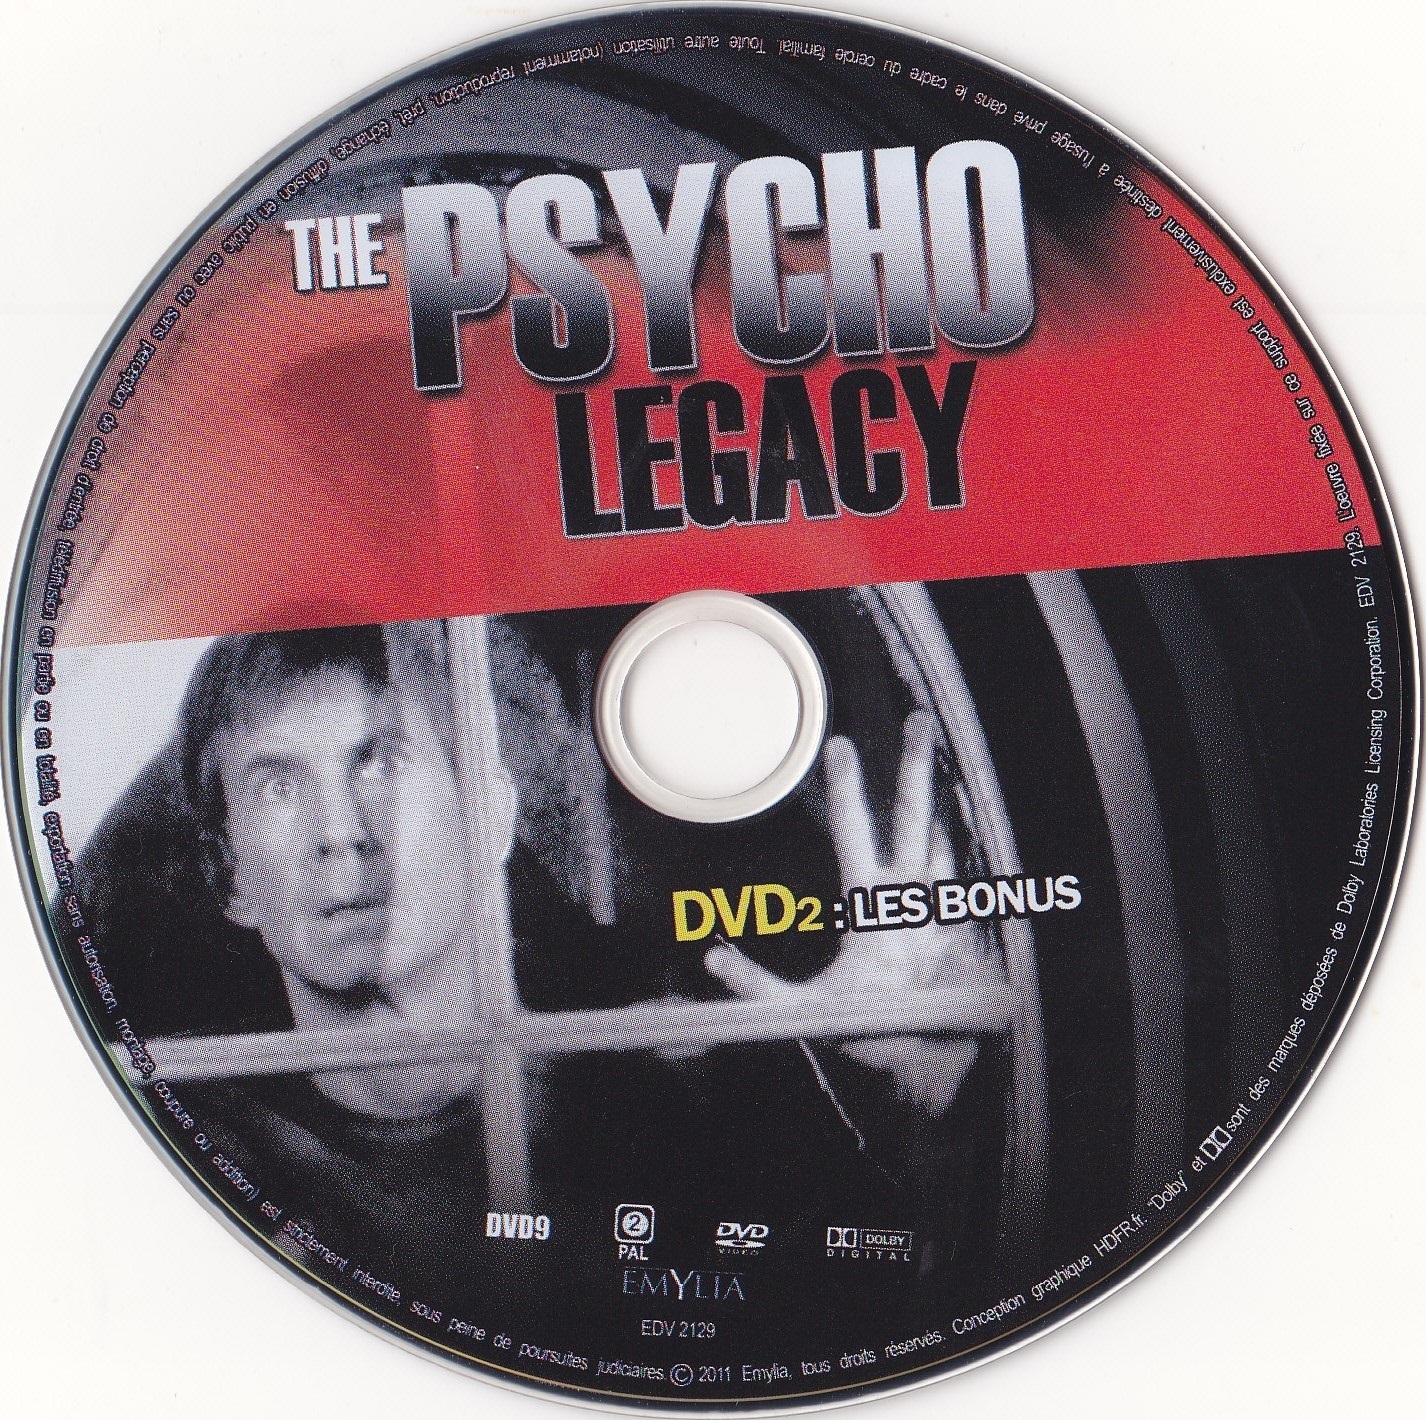 The Psycho Legacy DVD 2